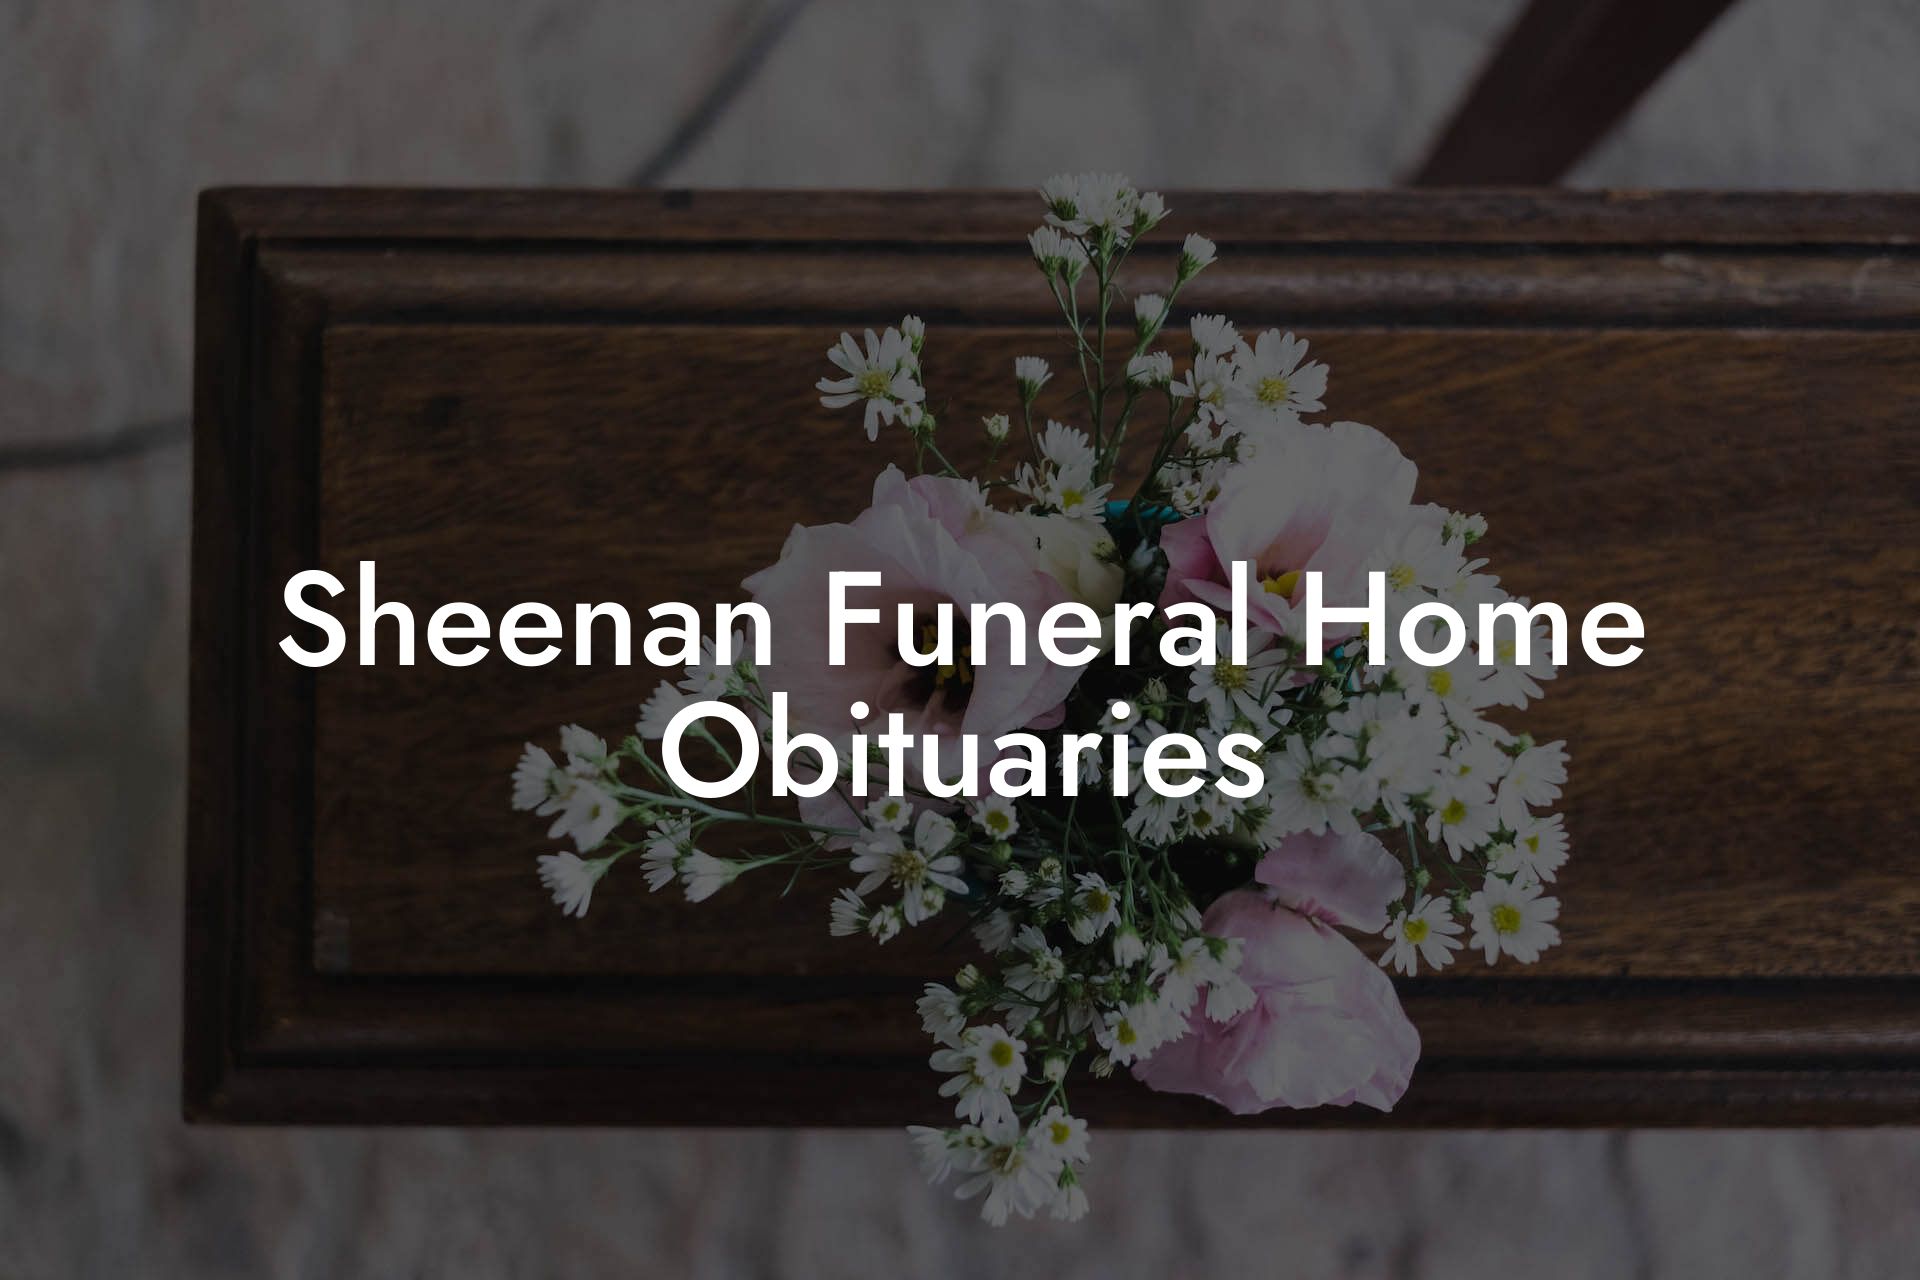 Sheenan Funeral Home Obituaries